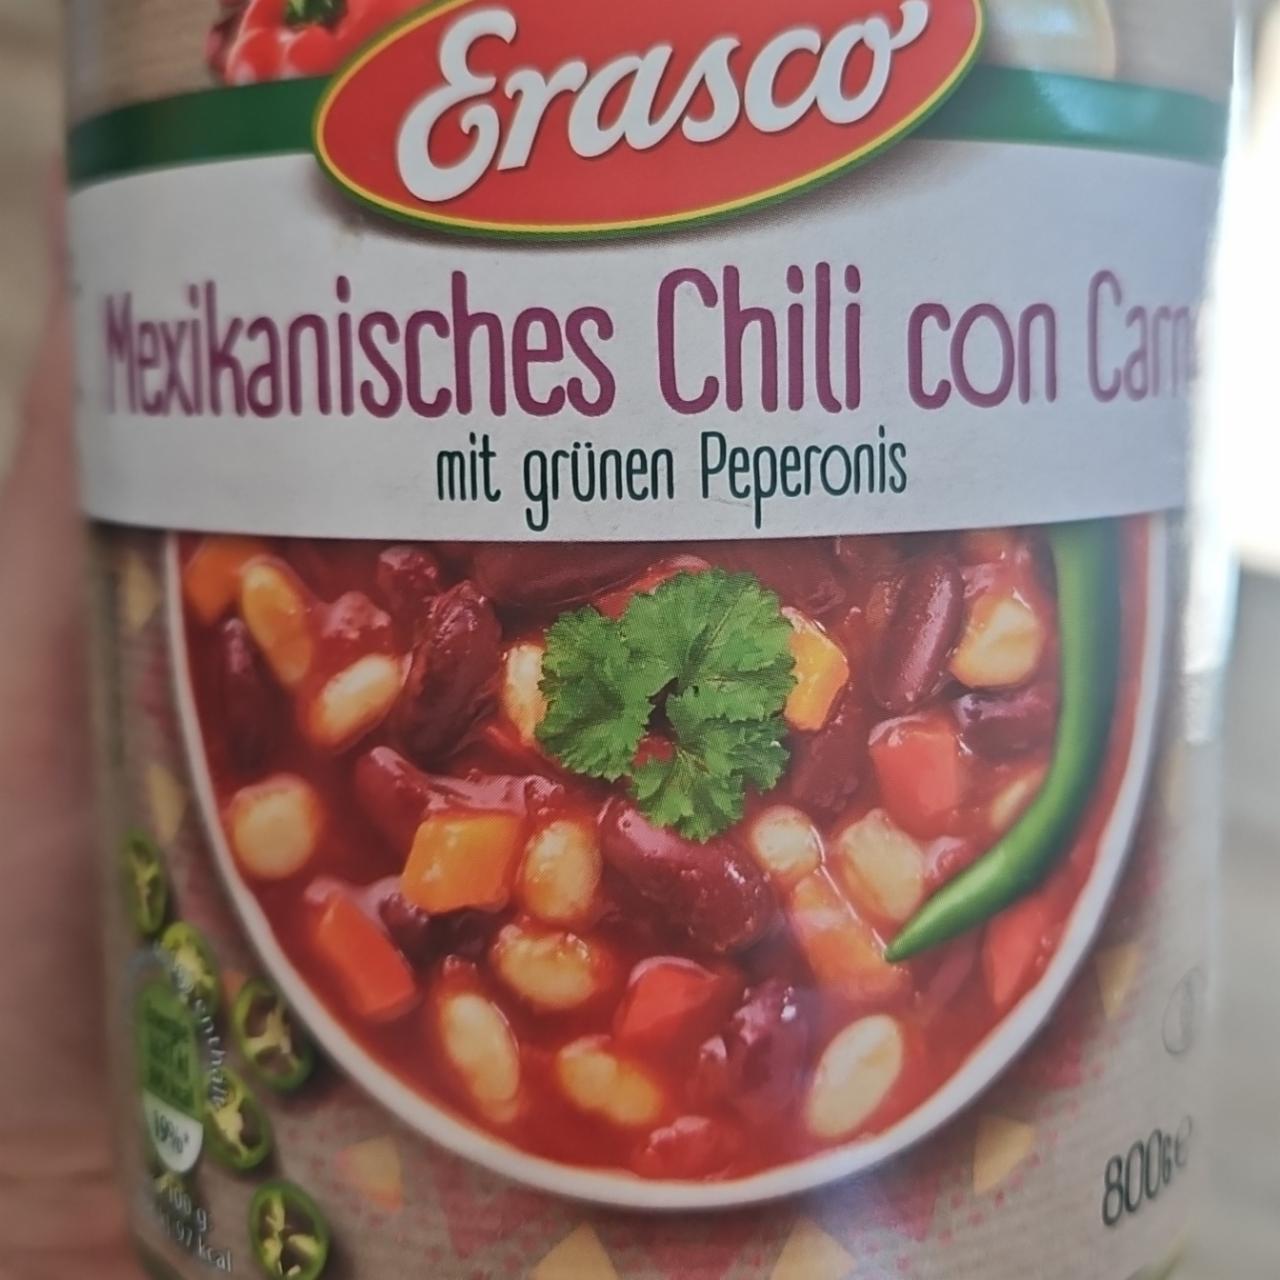 Fotografie - Mexikanisches Chili con Carne mit grünen Peperonis Erasco